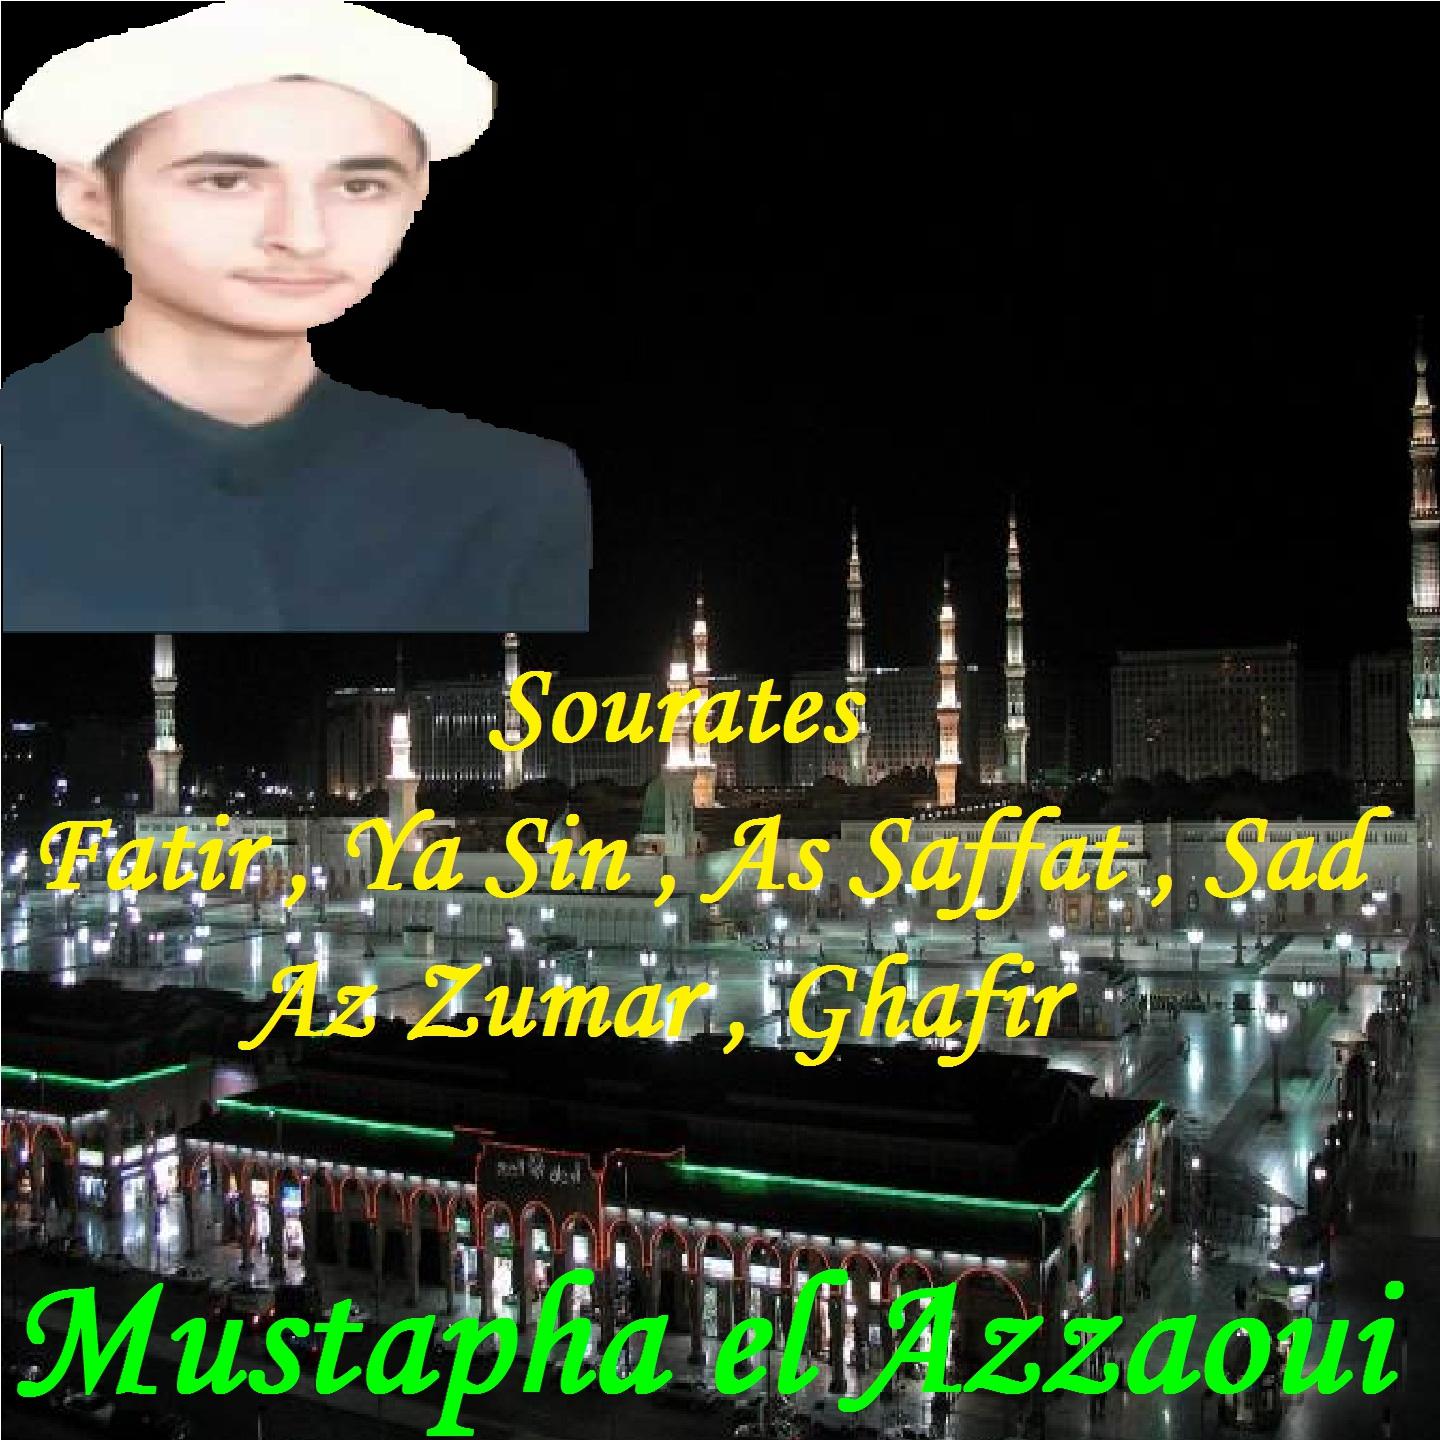 Постер альбома Sourates Fatir , Ya Sin , As Saffat , Sad , Az Zumar , Ghafir